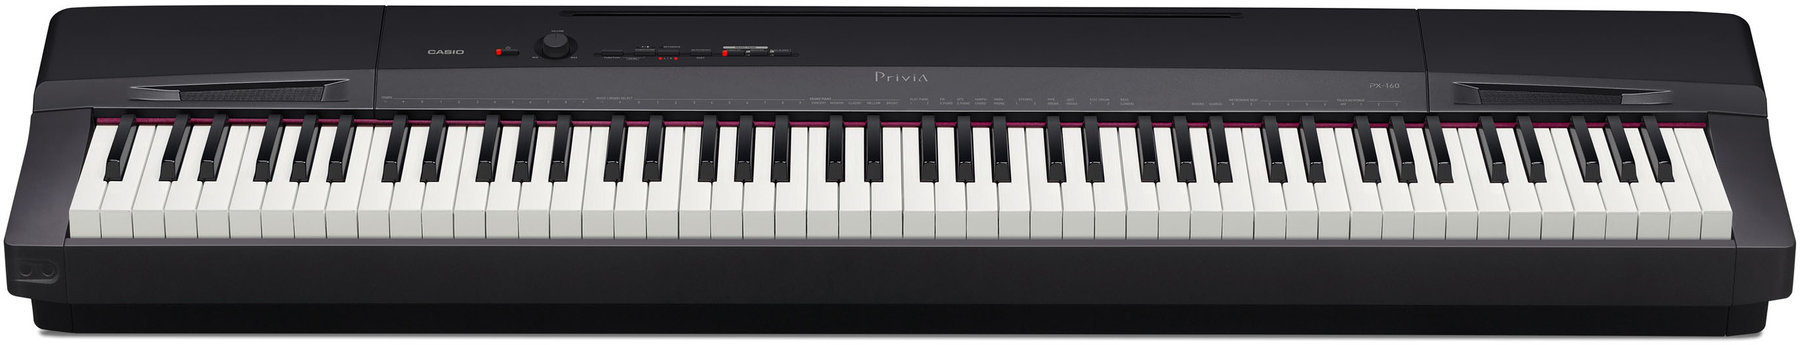 Piano de scène Casio PX-160BK